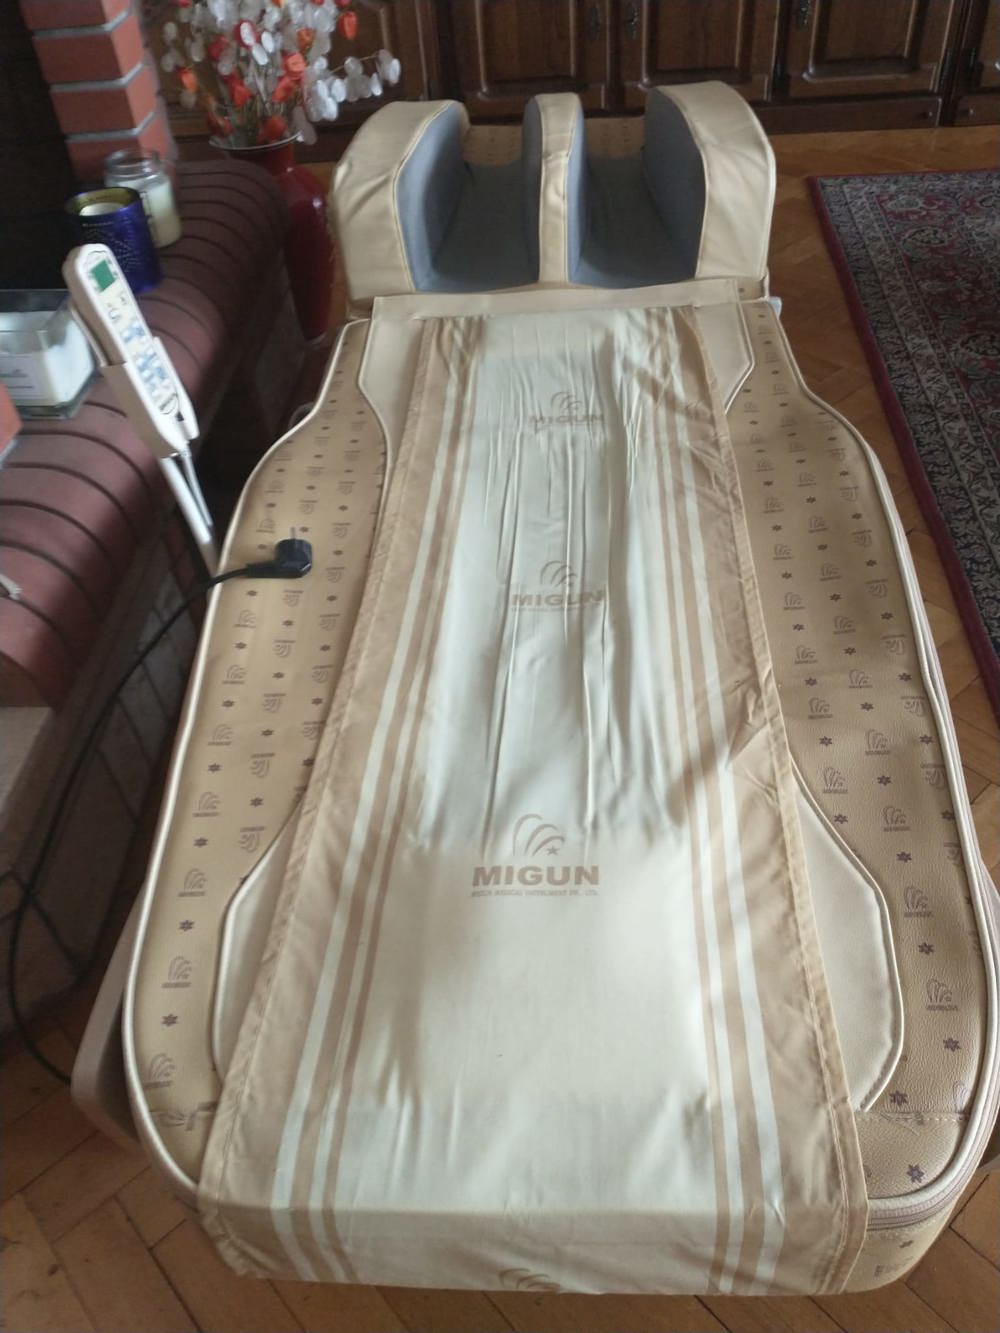 Migun massage bed - HY8800 - Free delivery